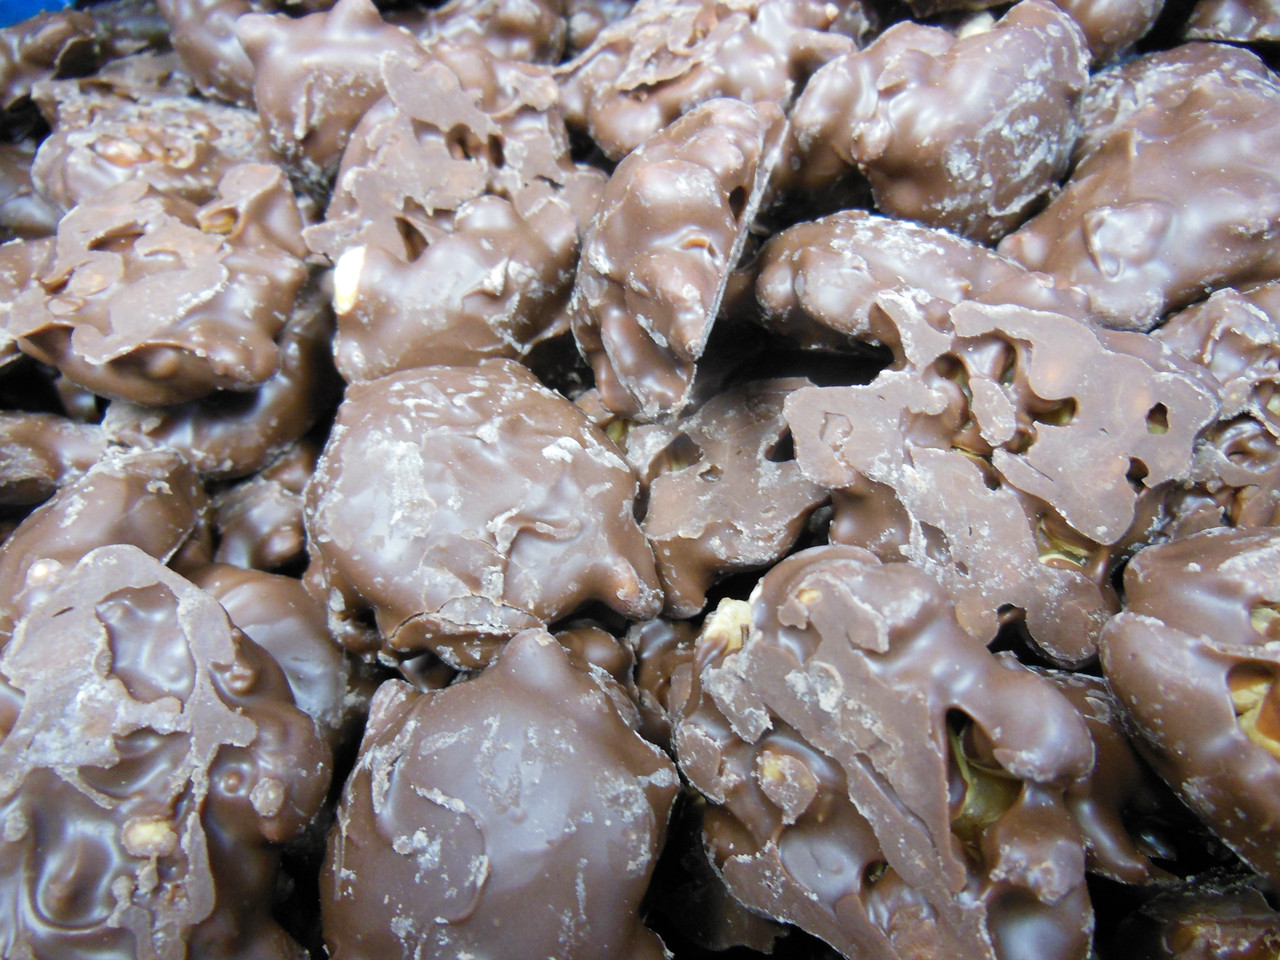 Dark Chocolate Mini Mint Balls 1 LB (453g) Zachary